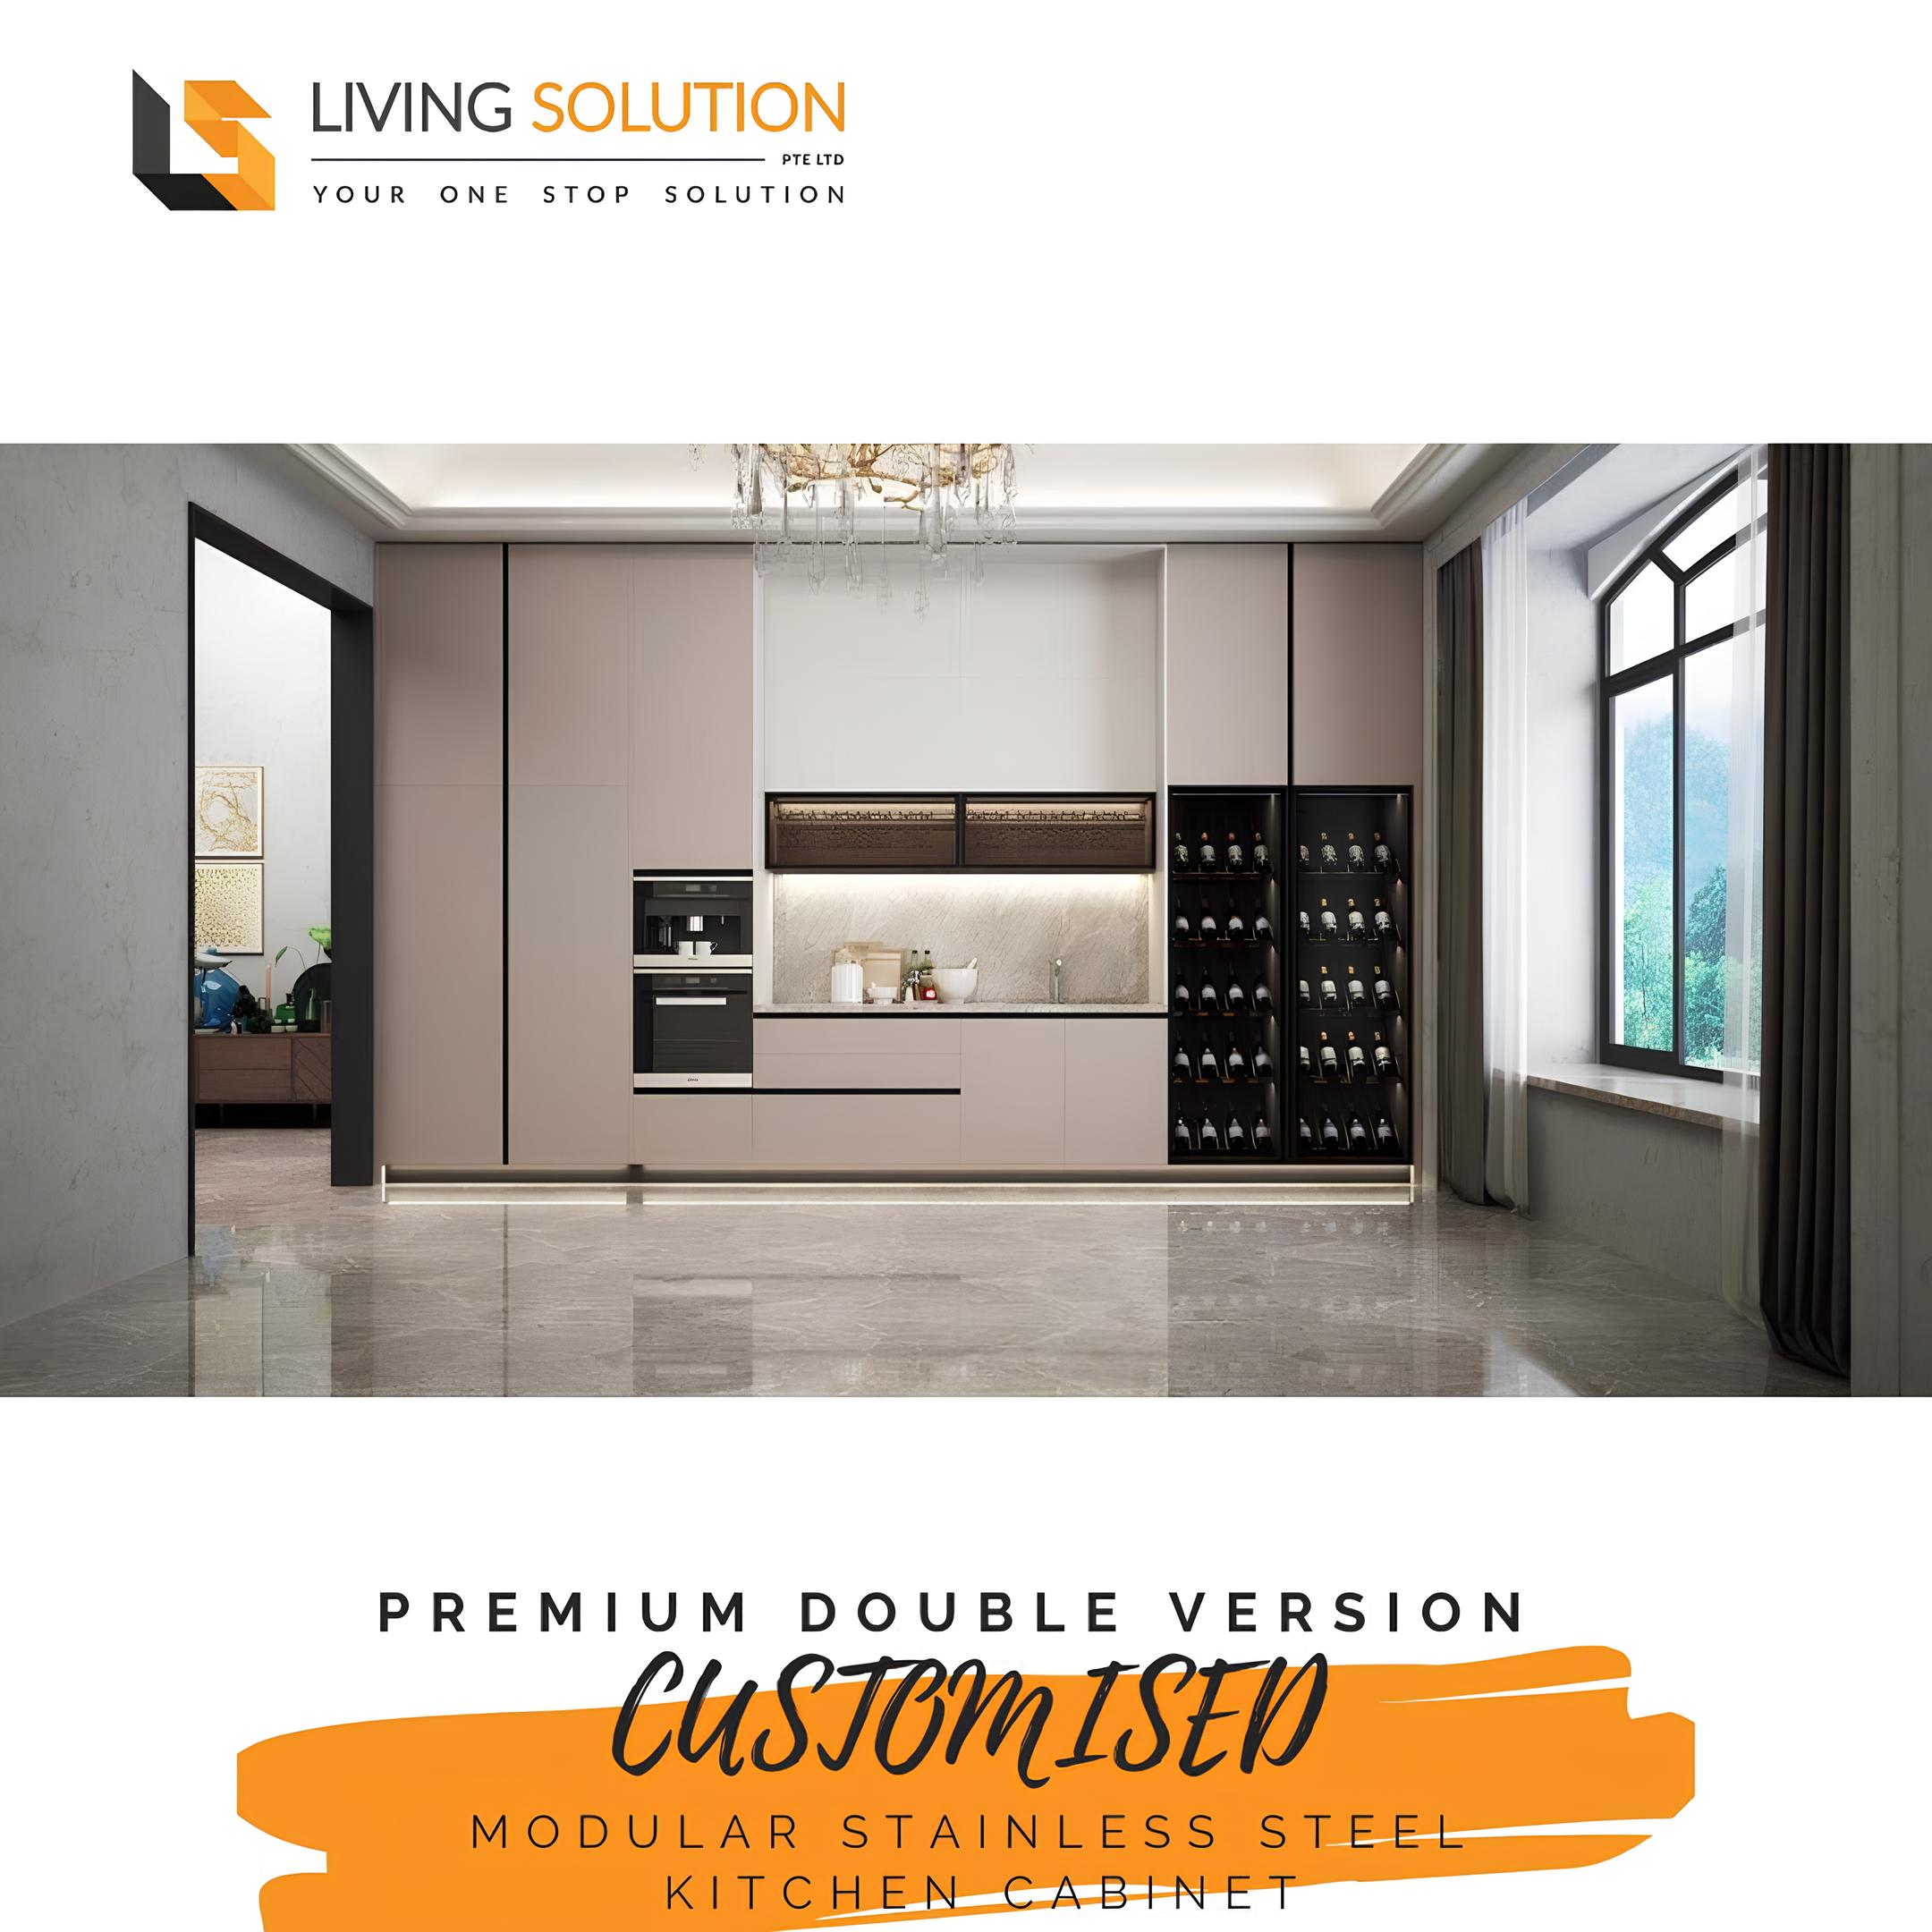 Premium Customisable Modular Stainless Steel Kitchen Cabinet